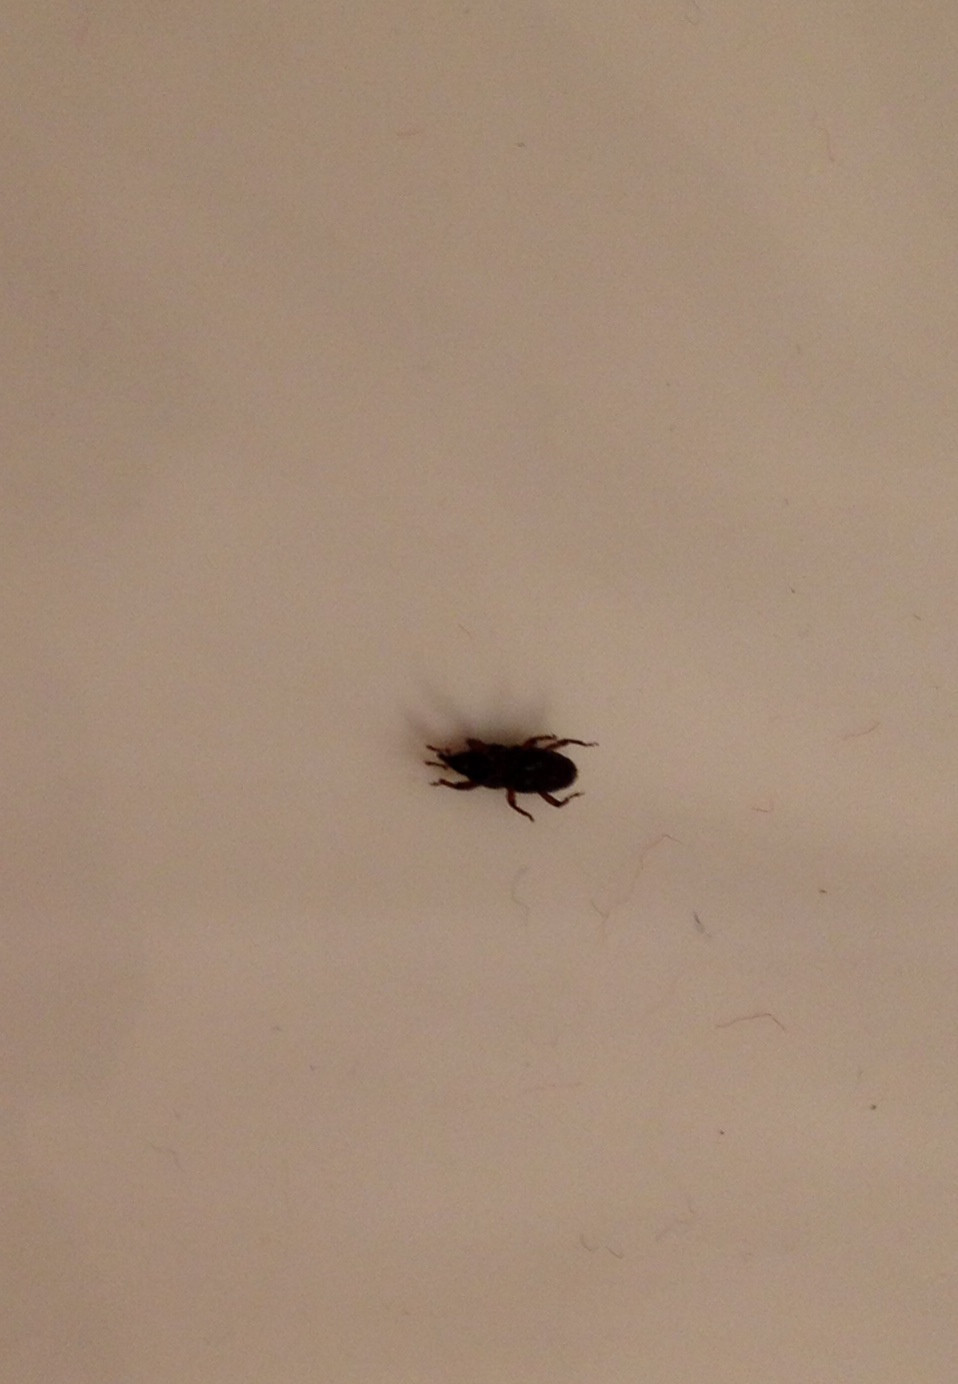 Small Bugs In Bathroom
 We keep seeing these bugs in the bathroom tub & floor